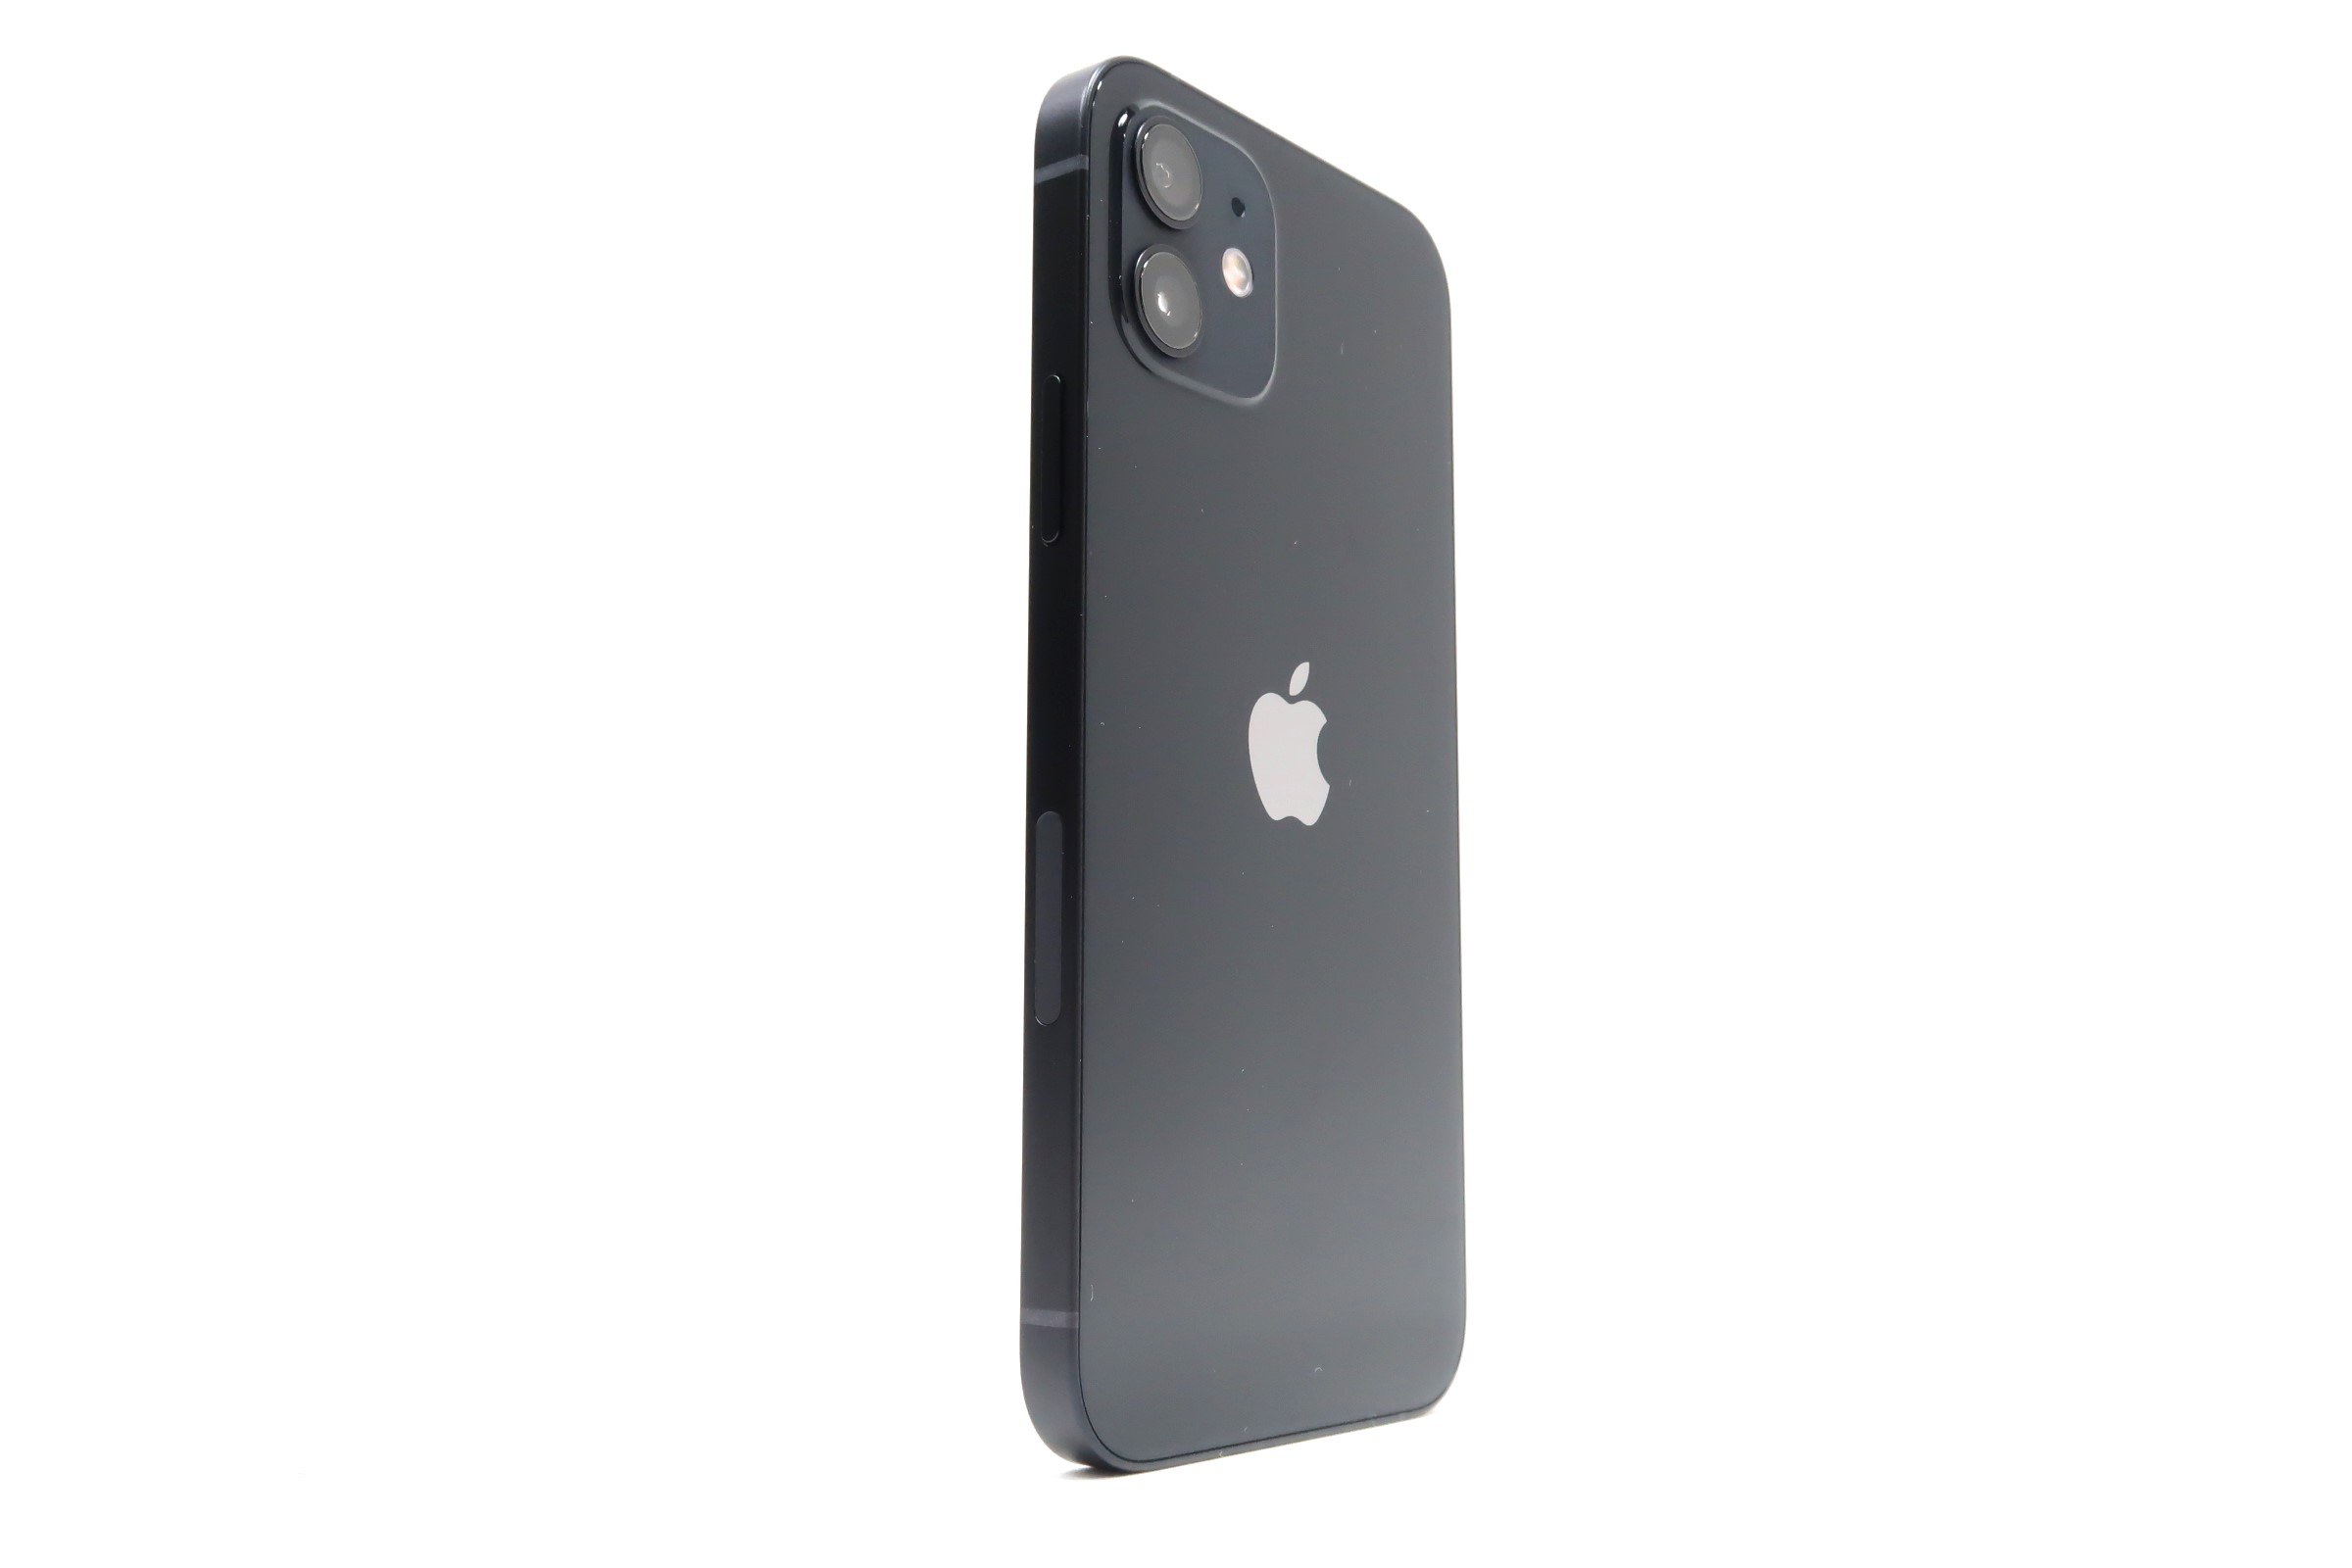 Apple iPhone 11 128GB Smartphone - Black - Unlocked - Refurbished